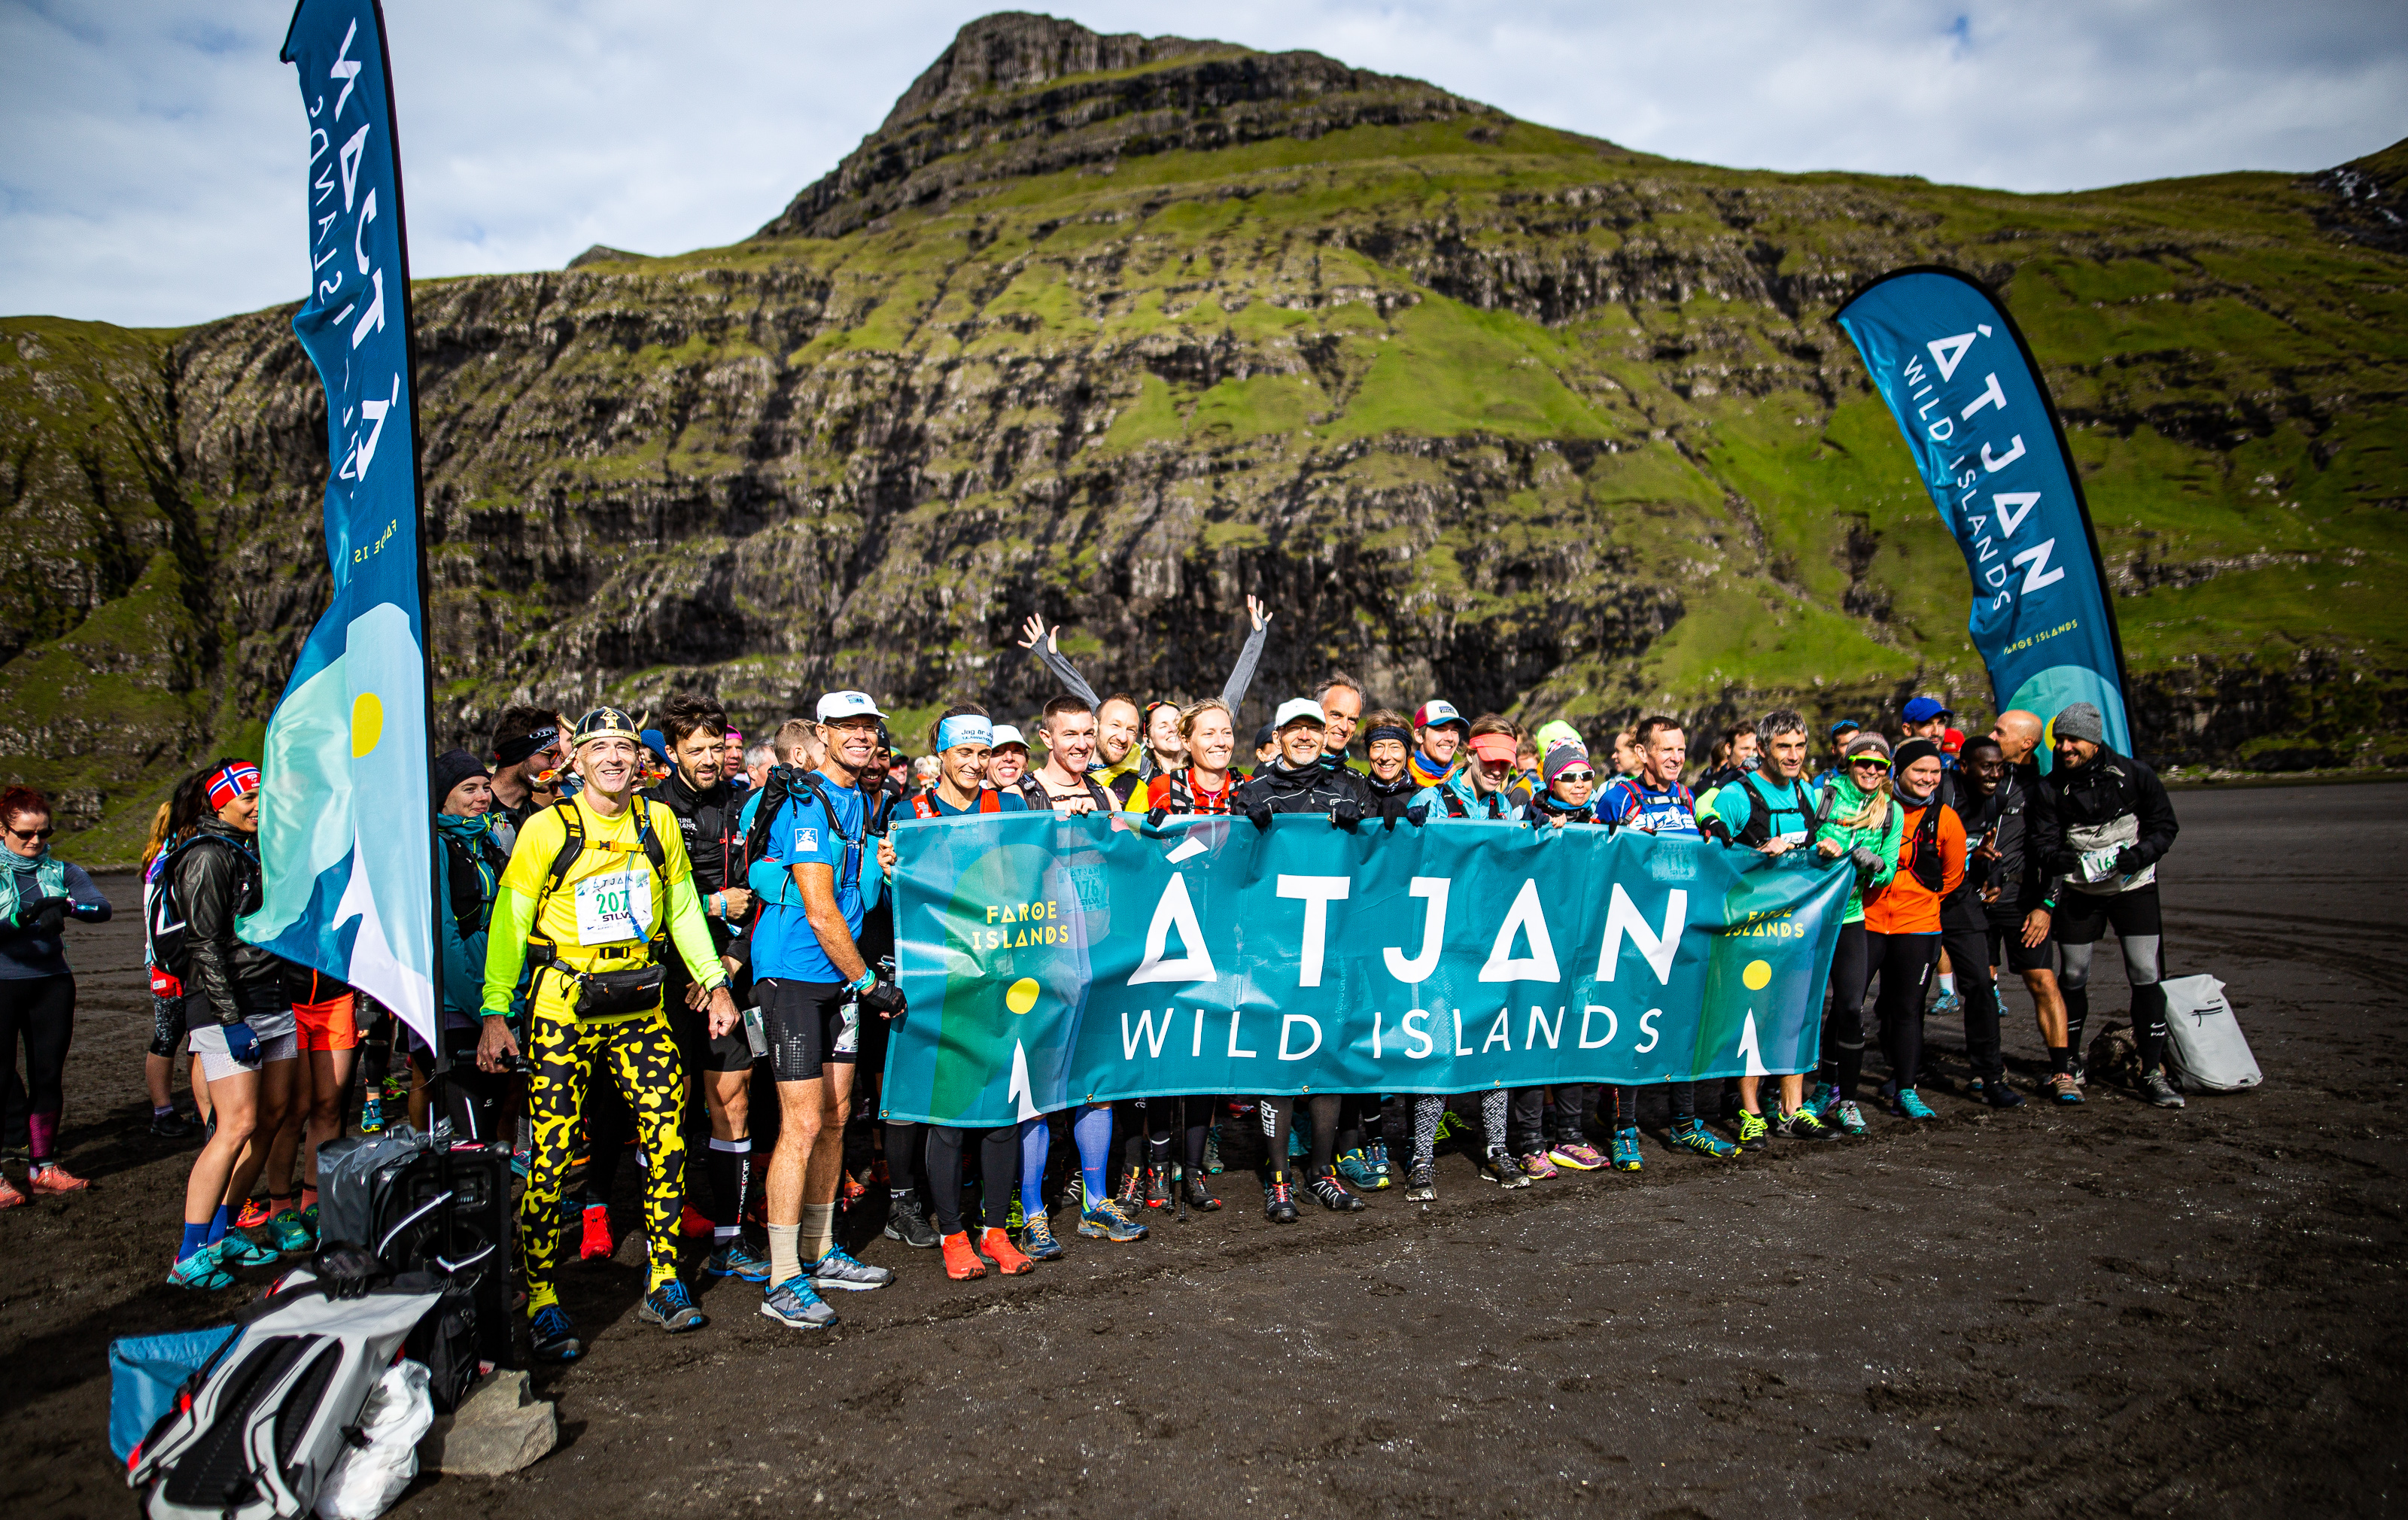 Photos from the 2019 edition of the Átjan Wild Islands festival